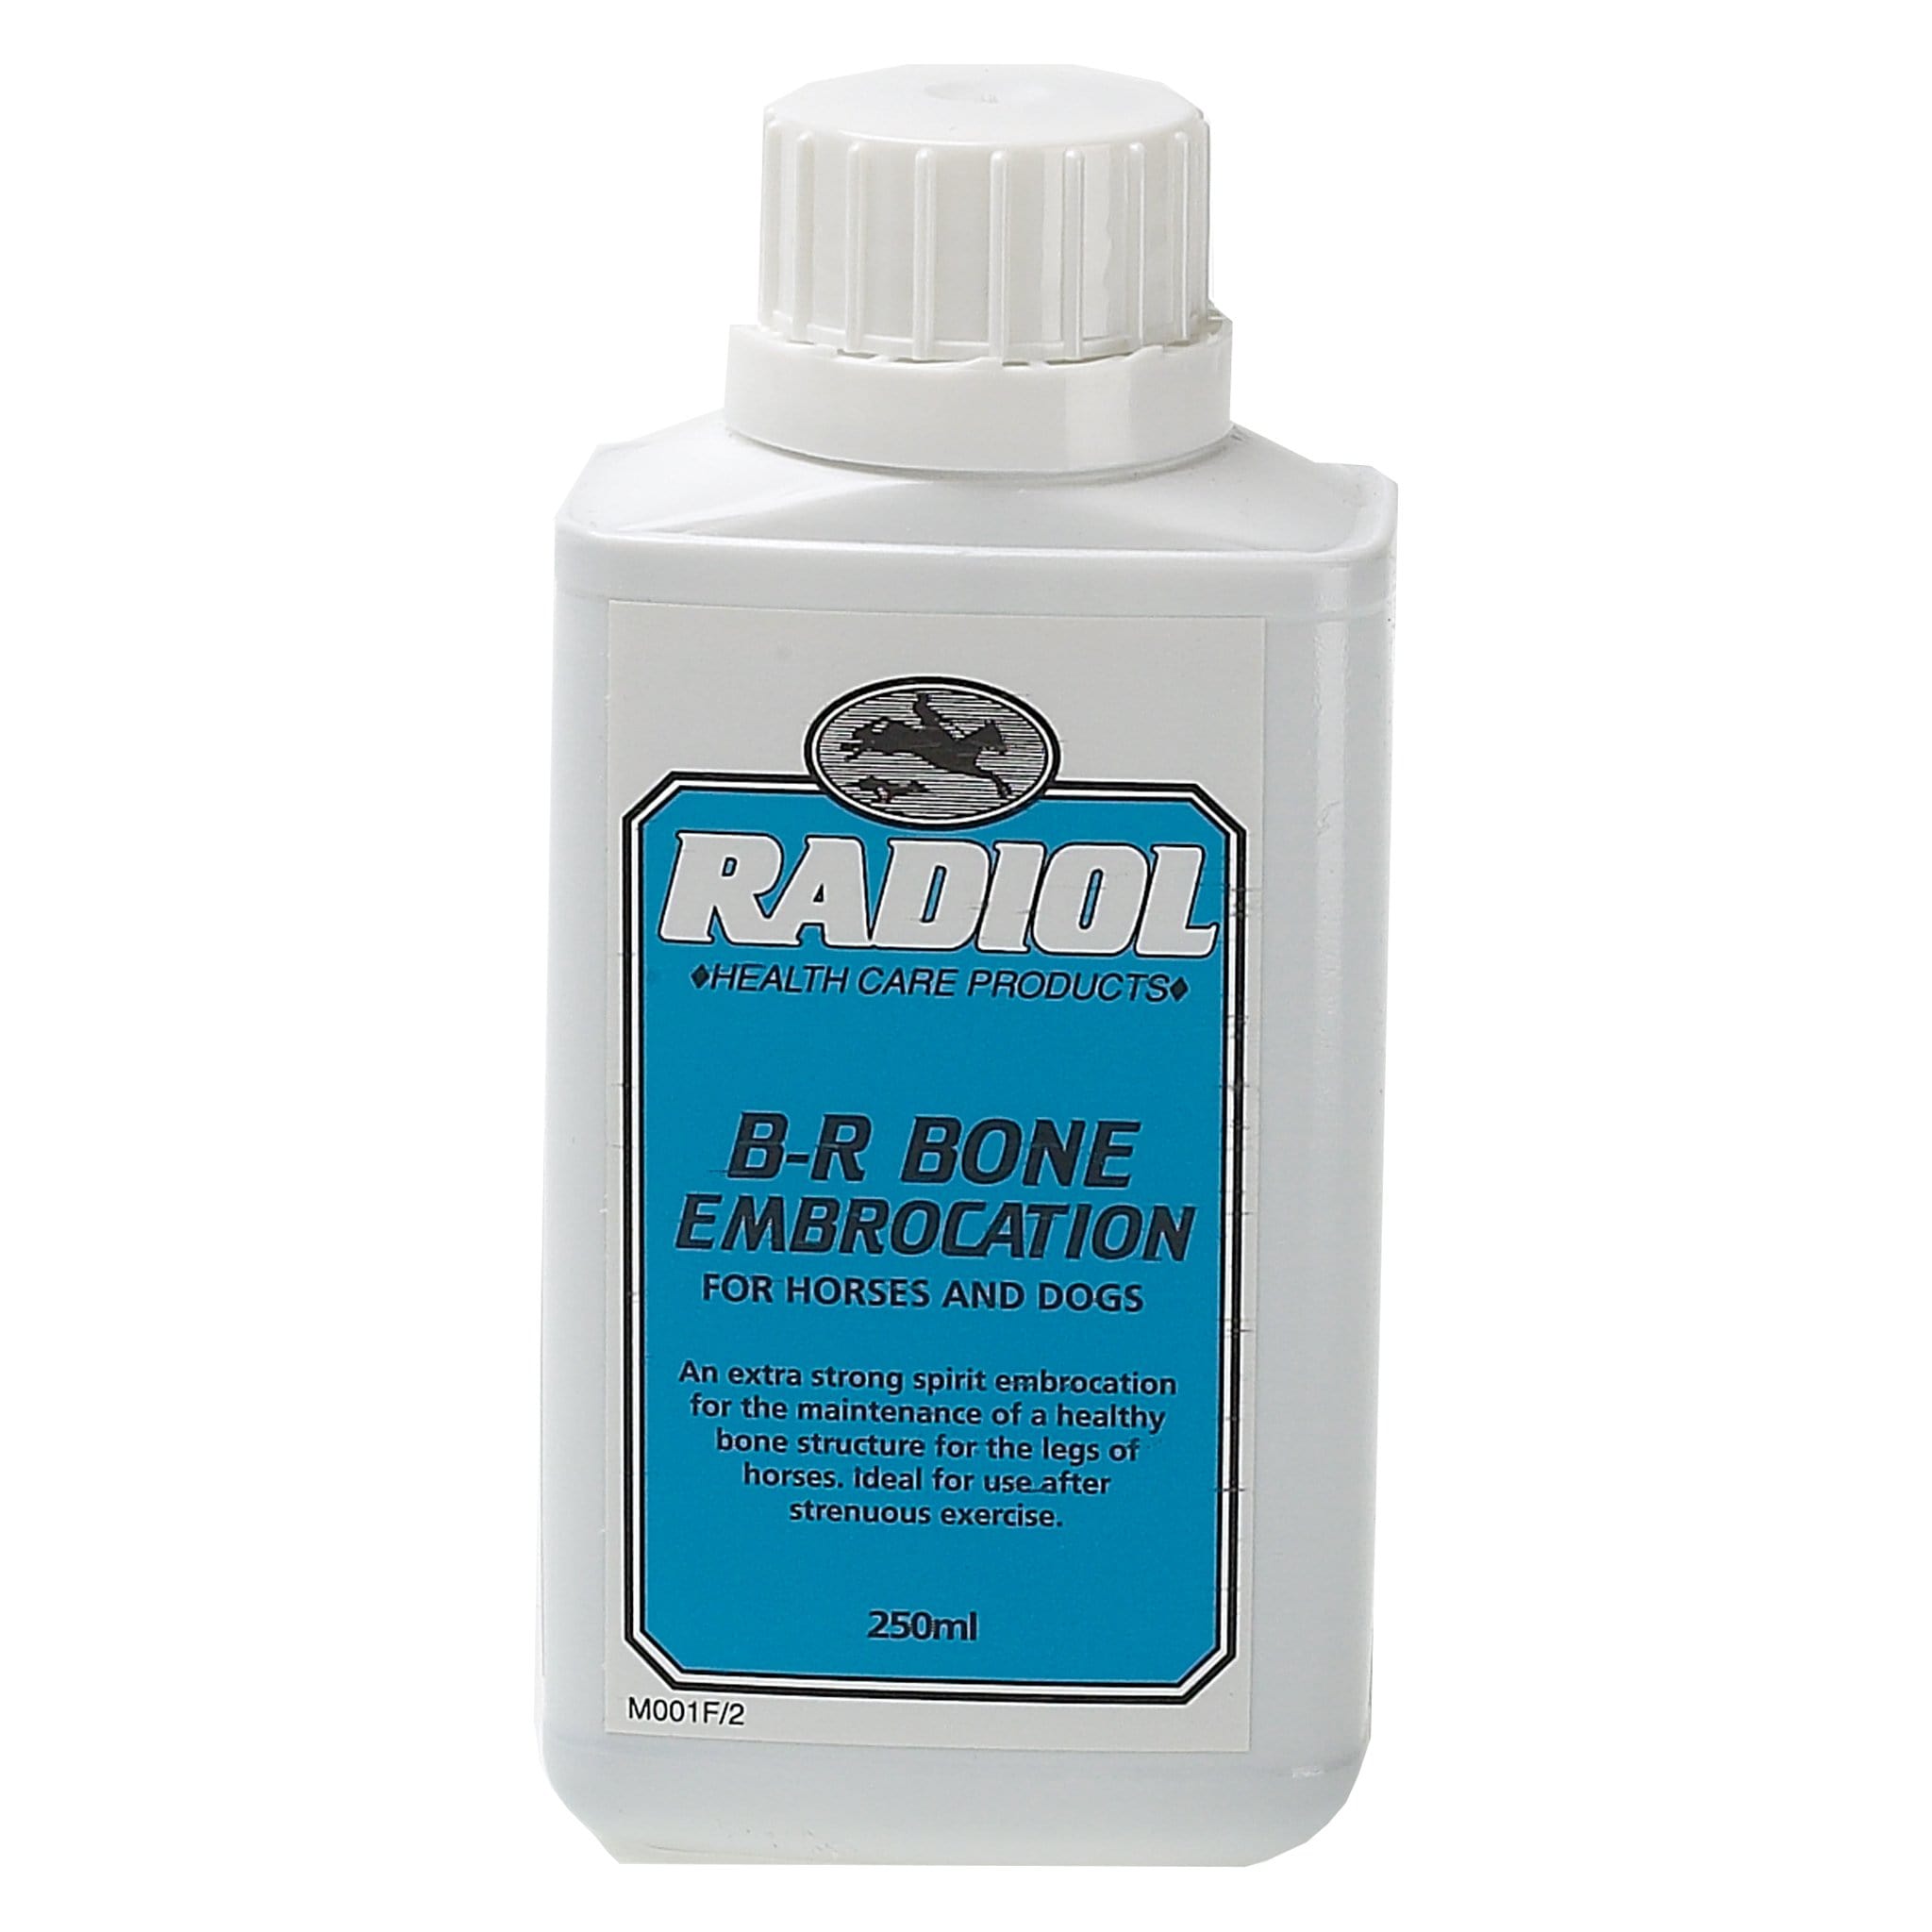 Radioal B-R Bone Embrocation 5218